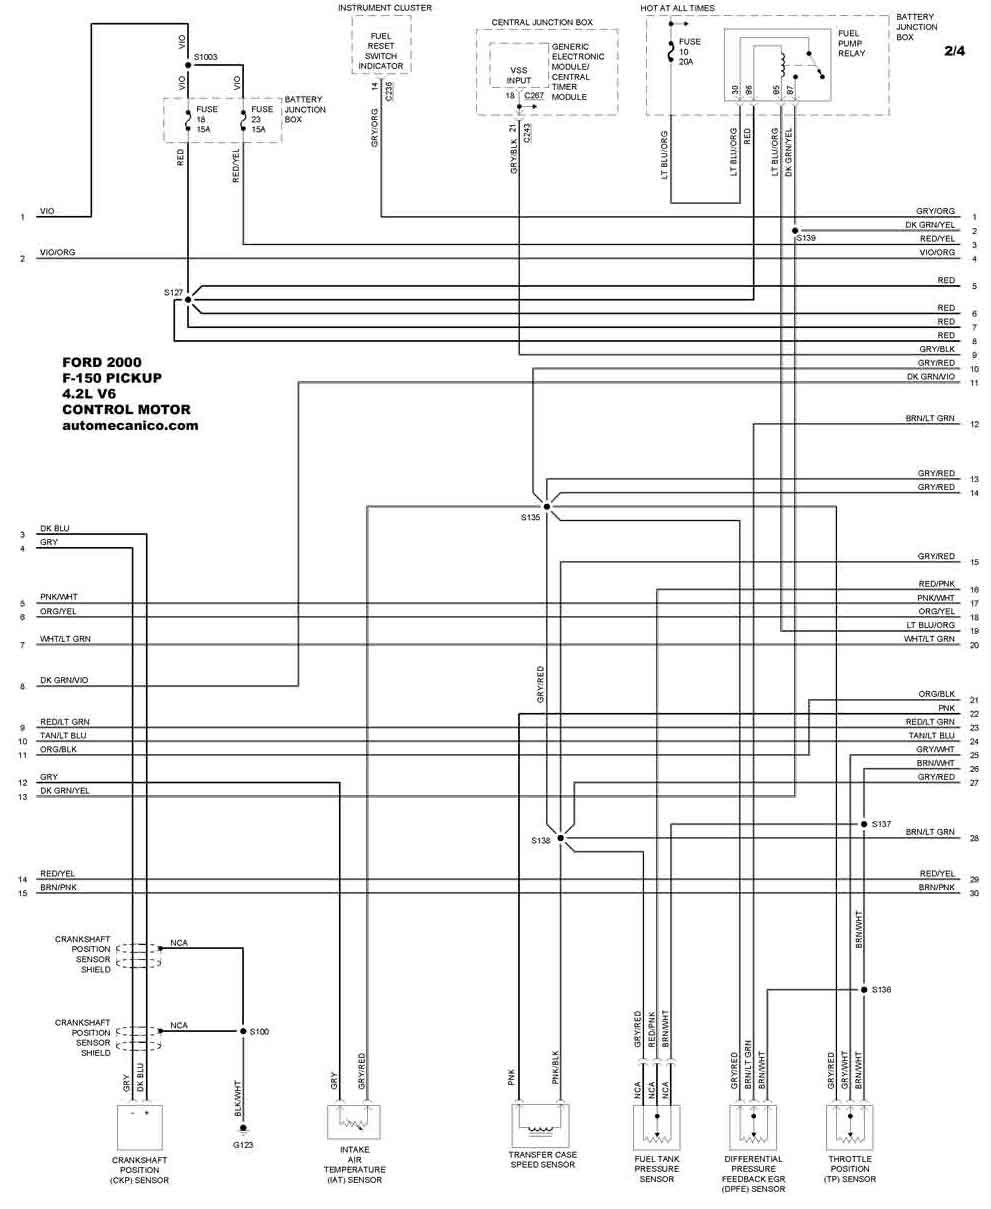 Diagramas De Motor 4.2 V6 De ford ford : Diagramas Control Del Motor - Graphics - Esquemas ...